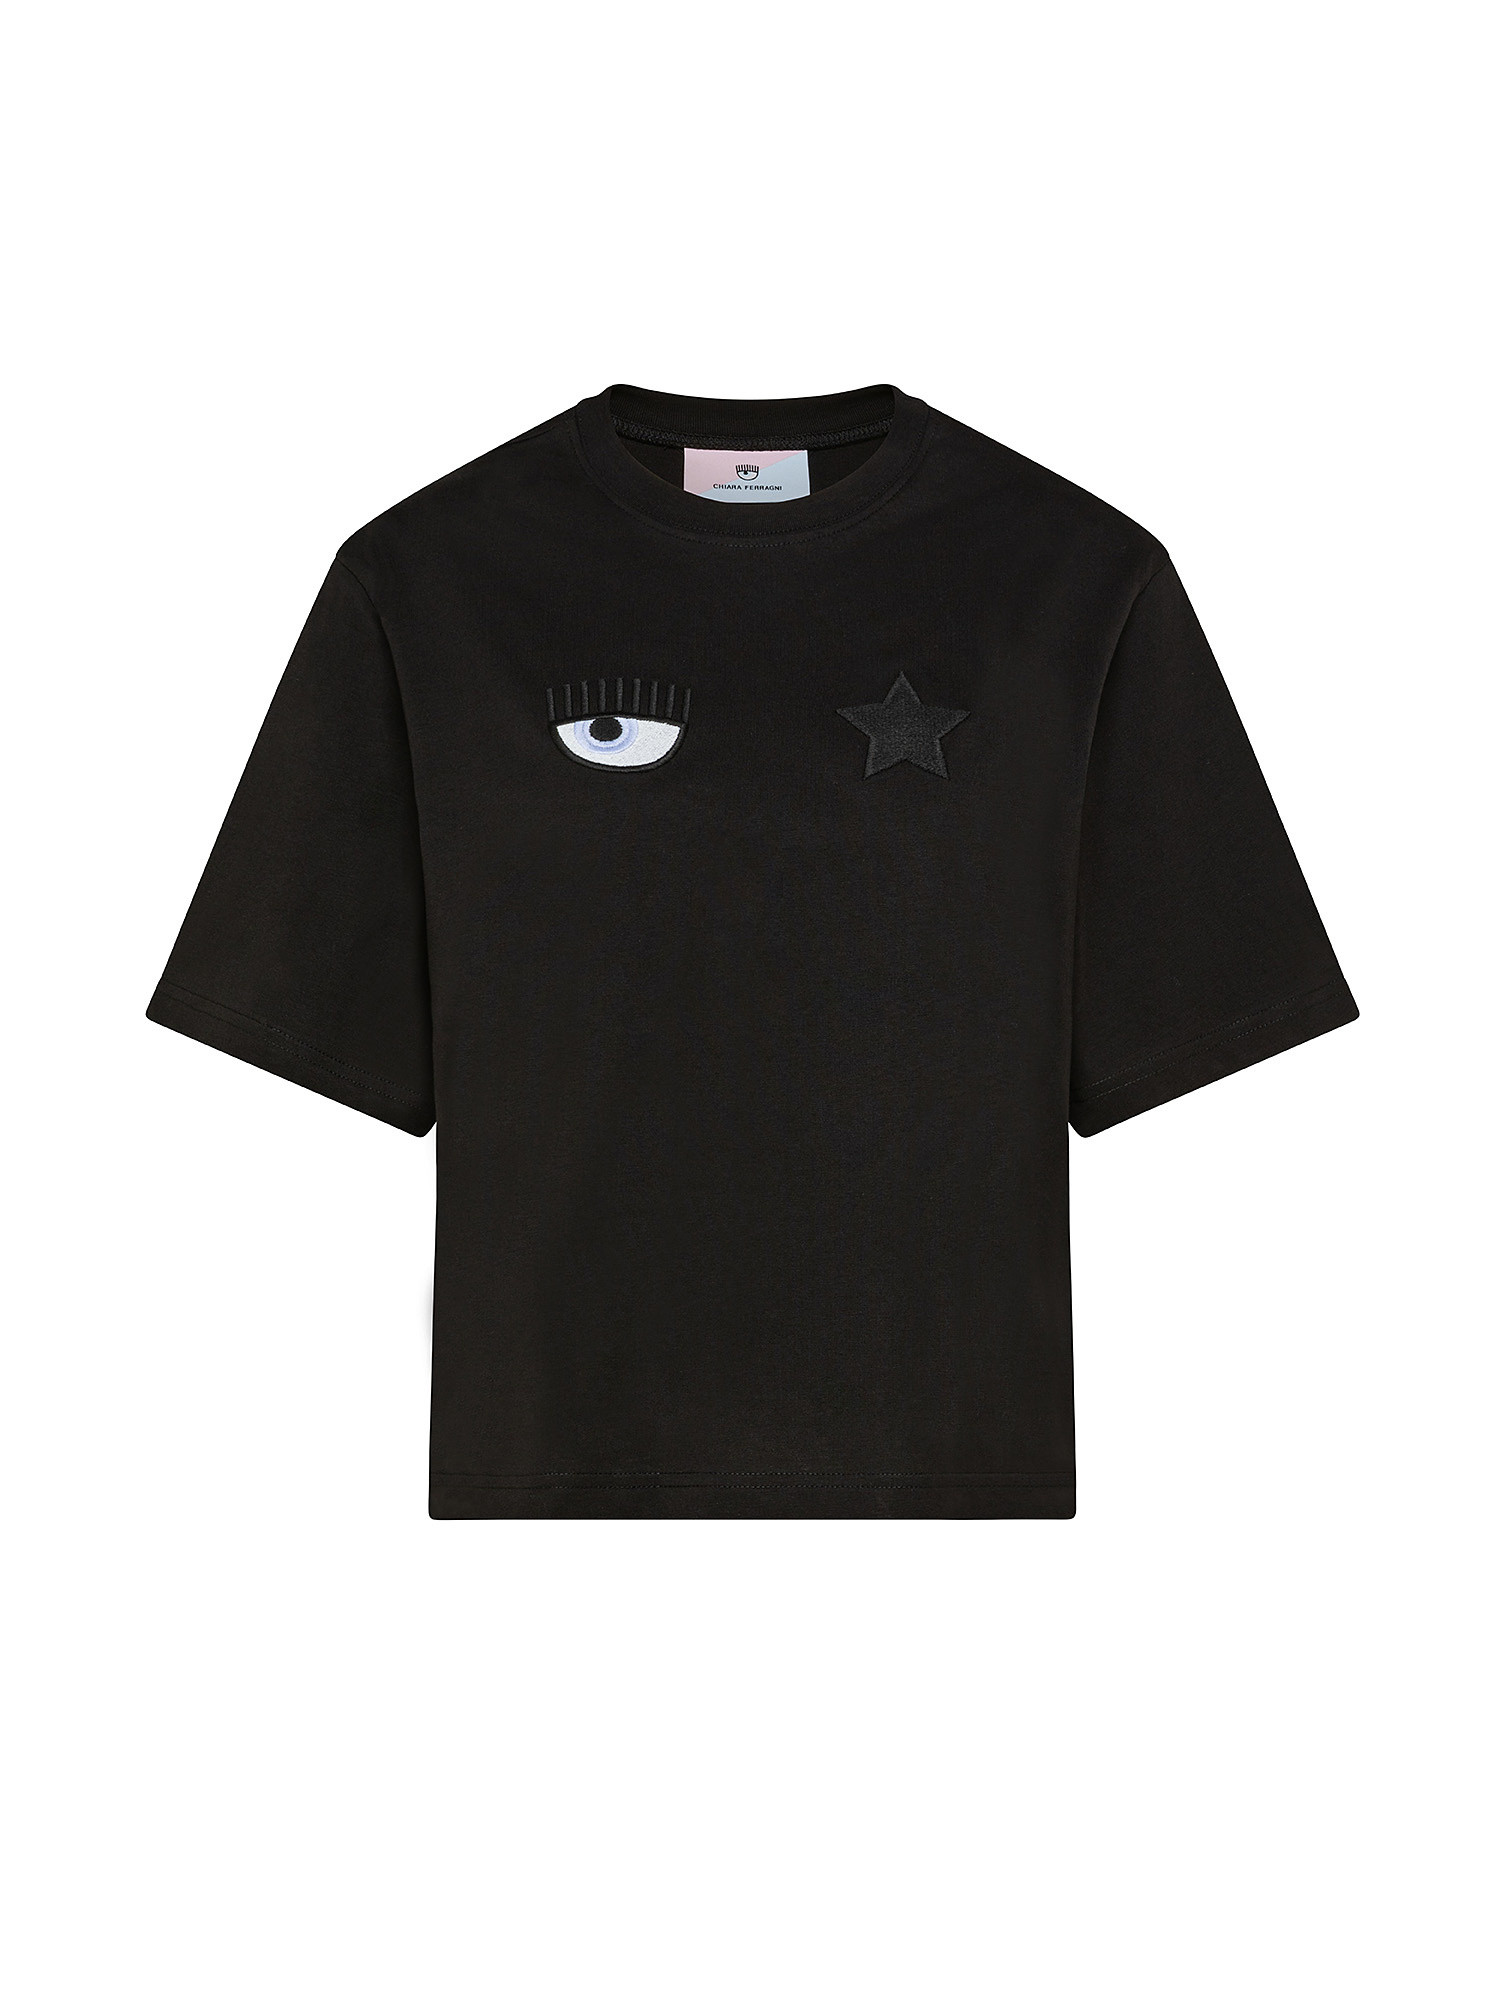 Eye Star T-shirt, Black, large image number 0